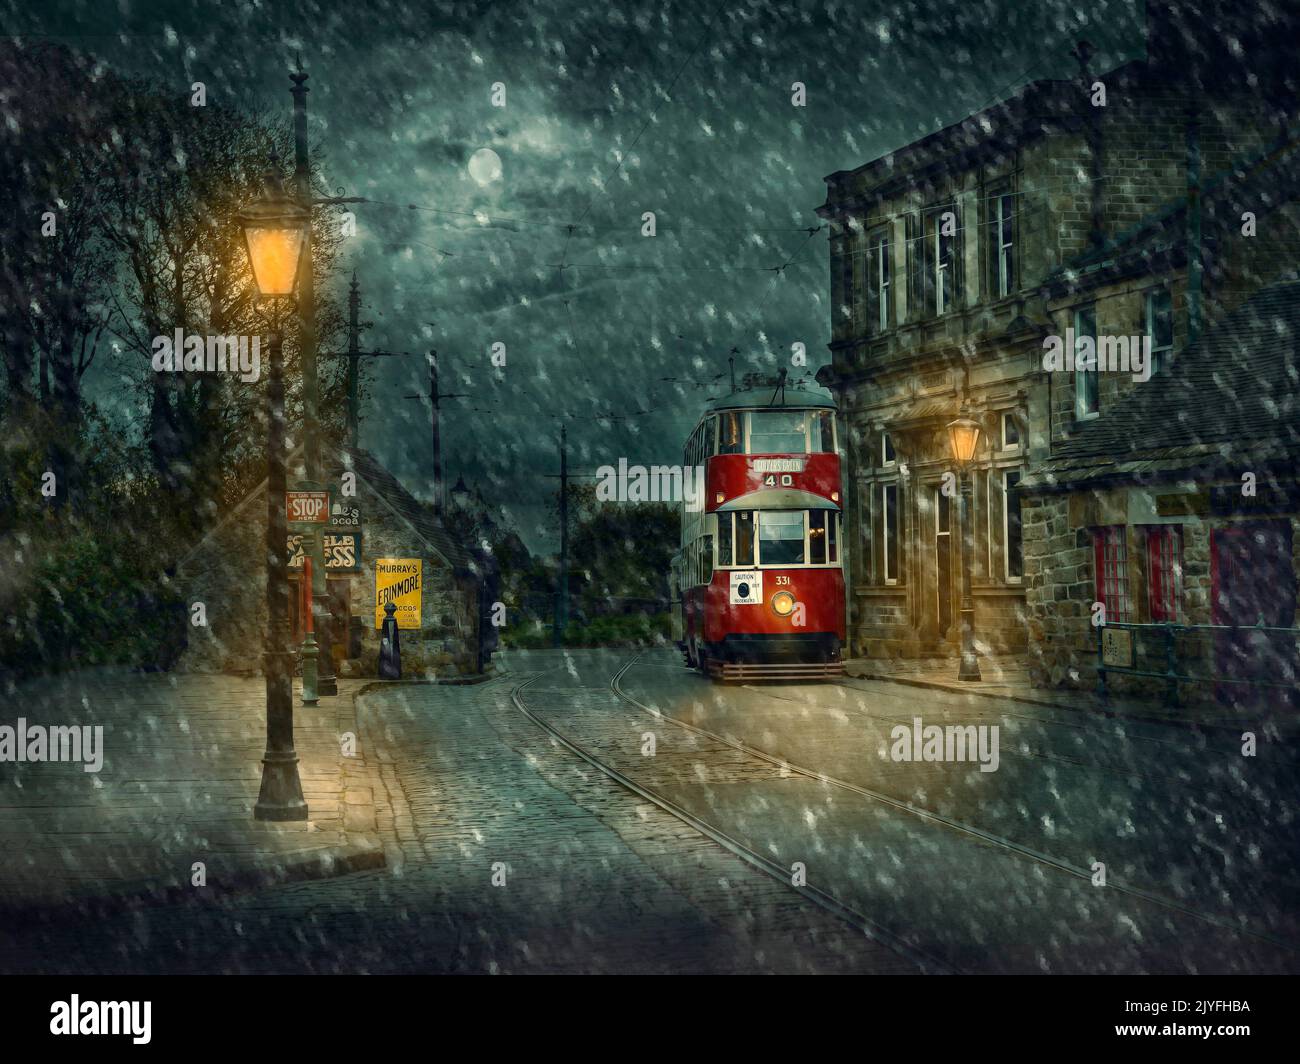 Victorian Tram, Snowy Street Scene Stock Photo